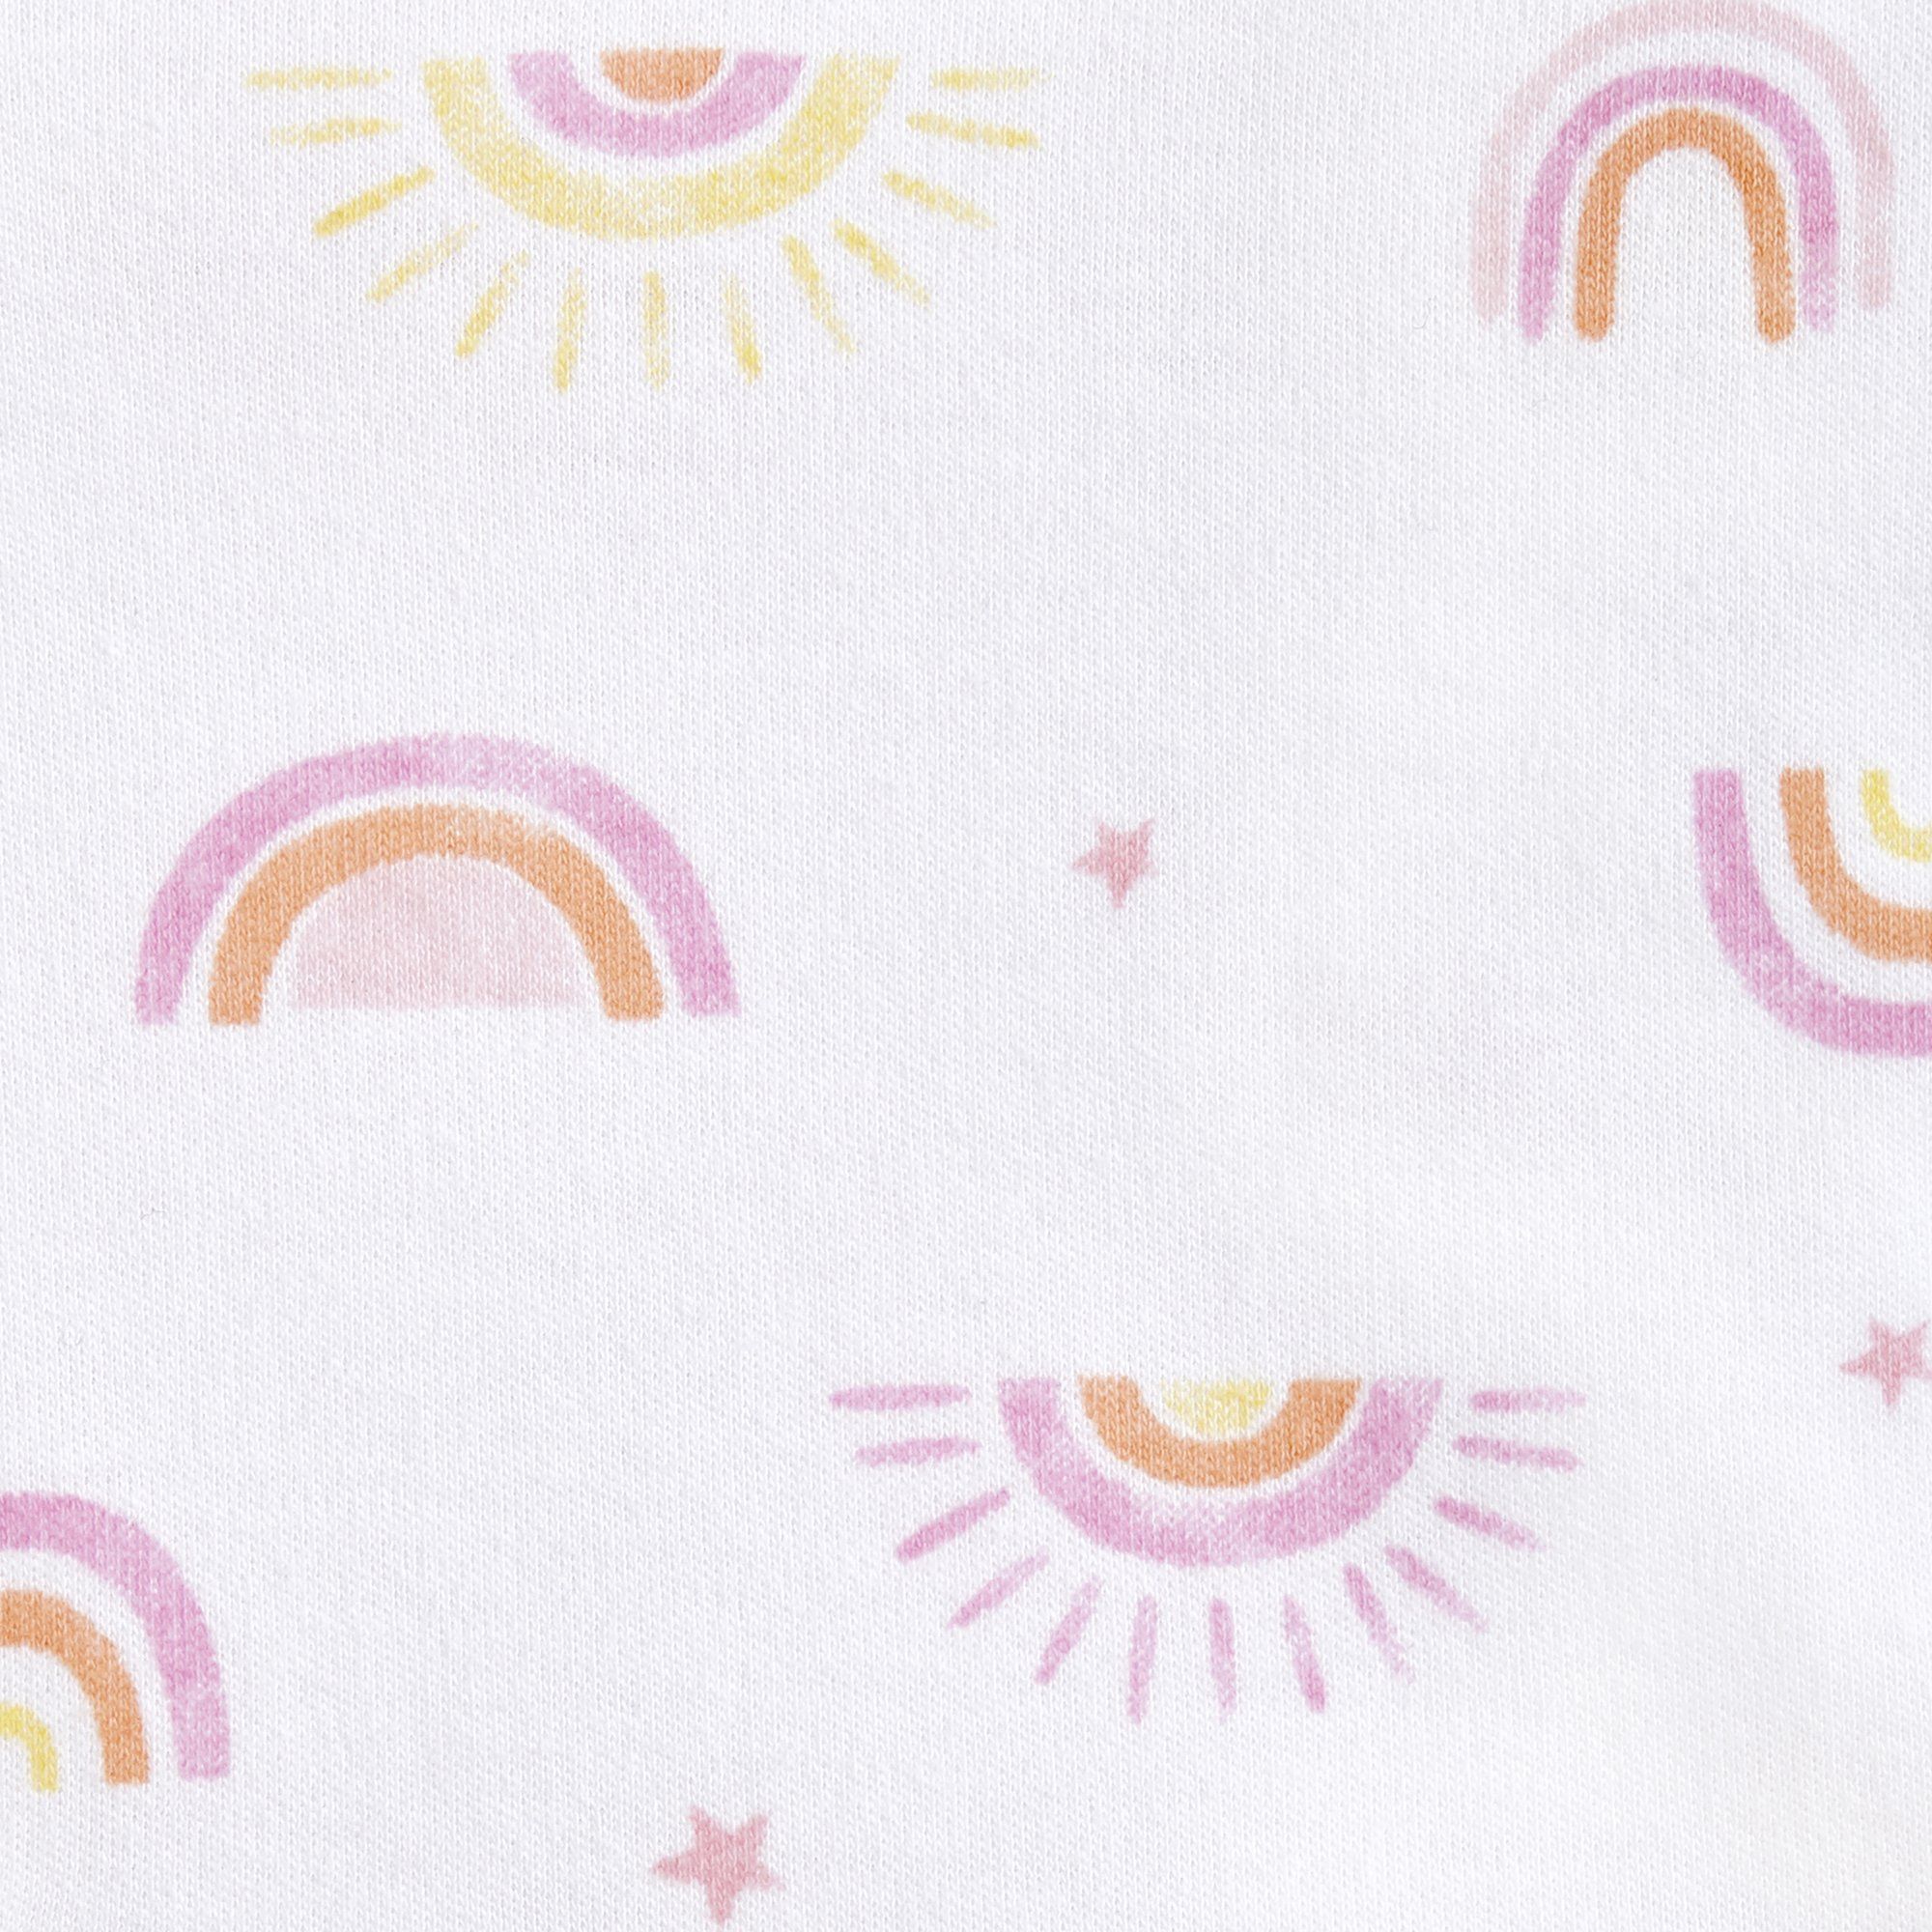 HALO SleepSack Swaddle, Sunshine Rainbows Pink, Small (3 to 6 Months) - 1 ct